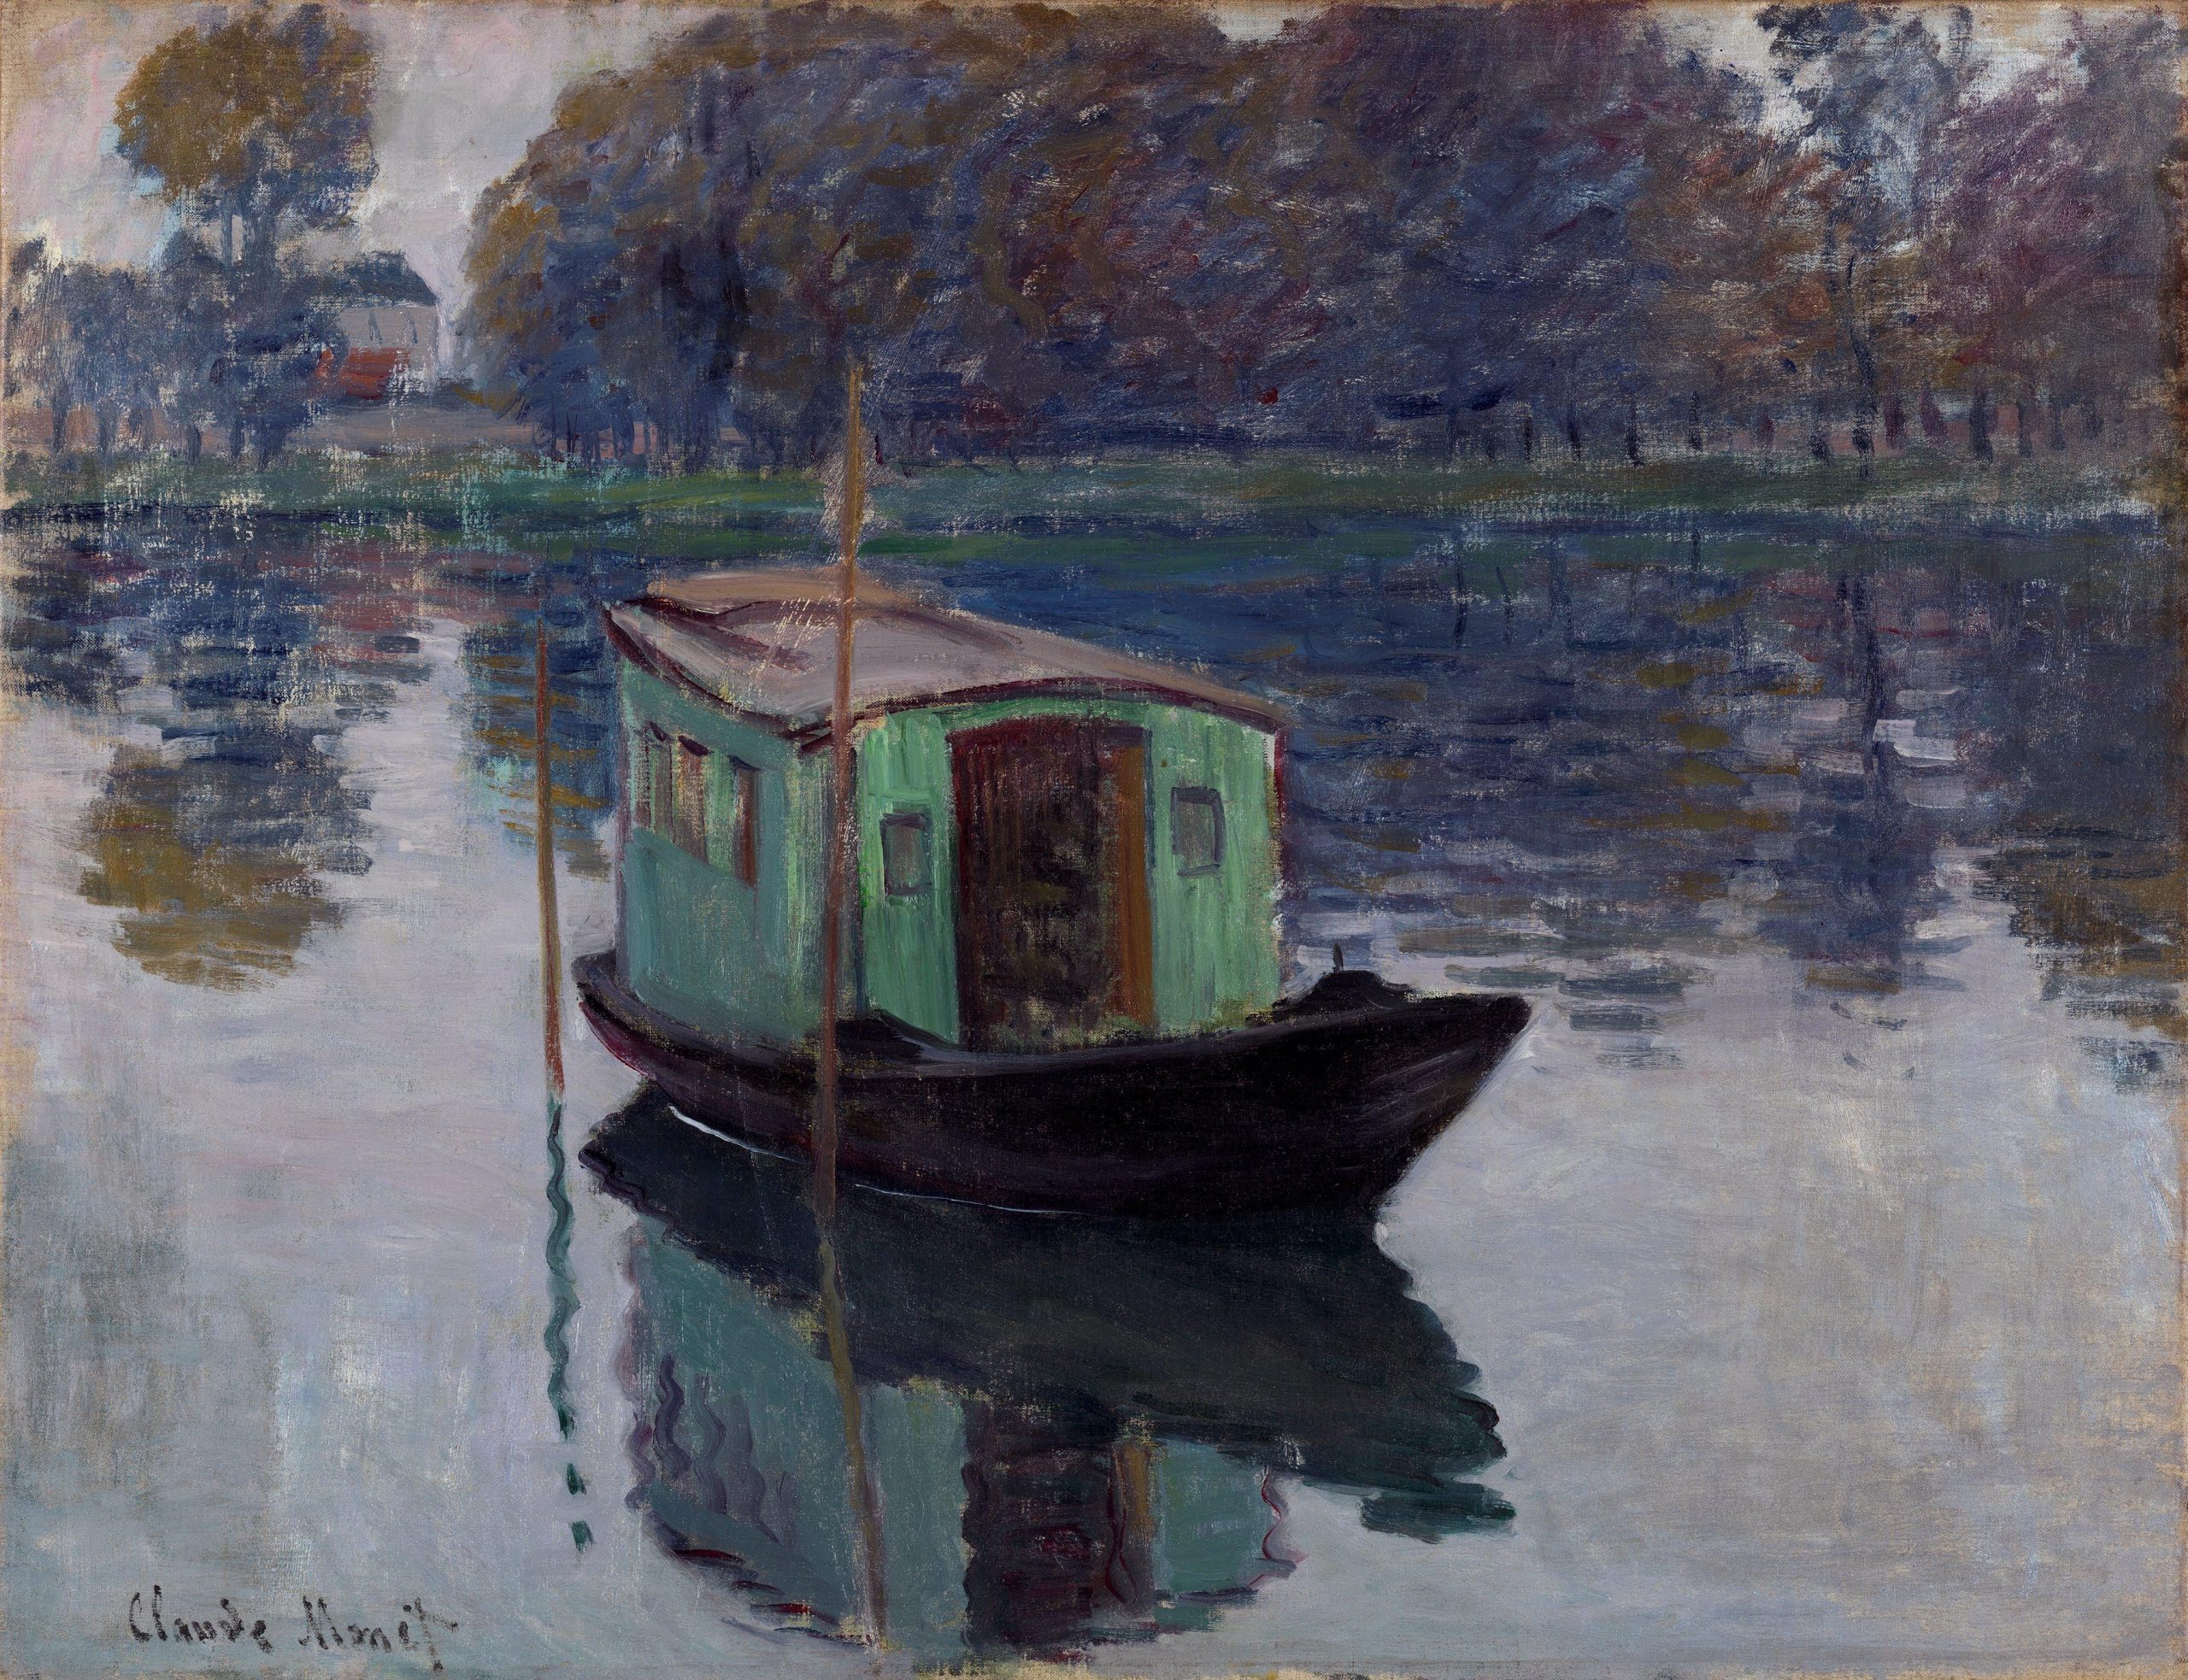 Tranh của Claude Monet